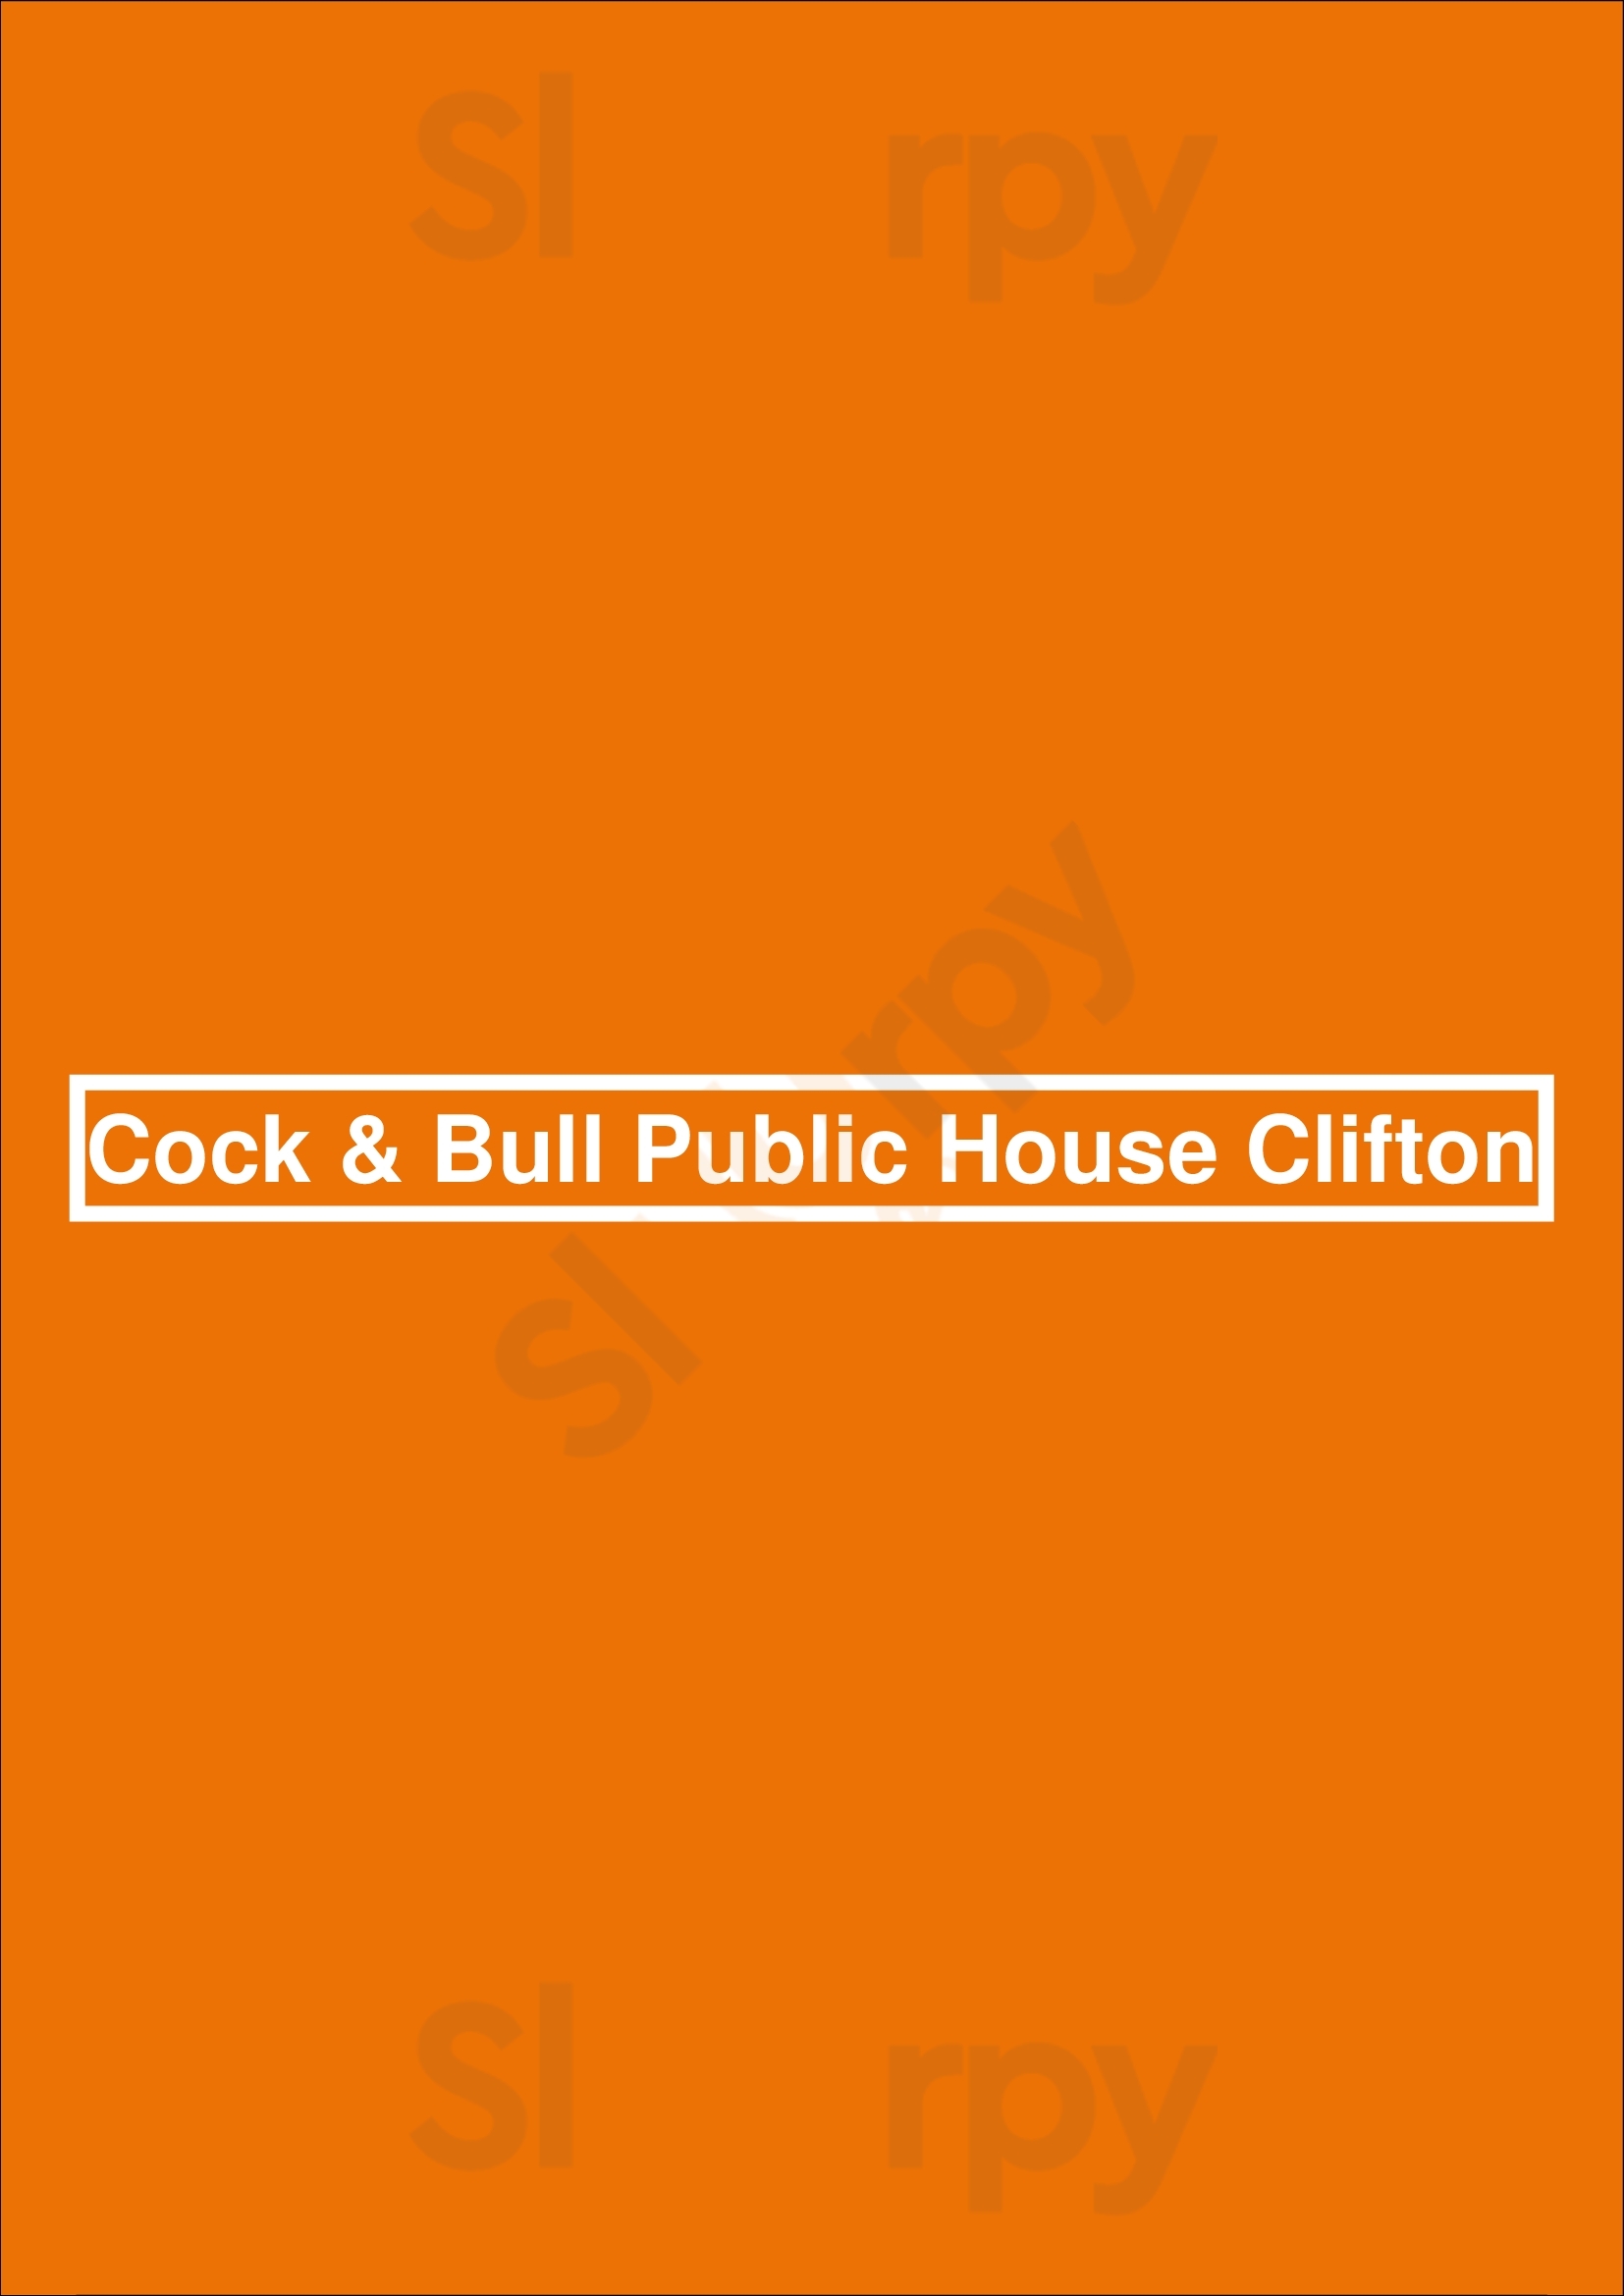 Cock & Bull Public House Clifton Cincinnati Menu - 1